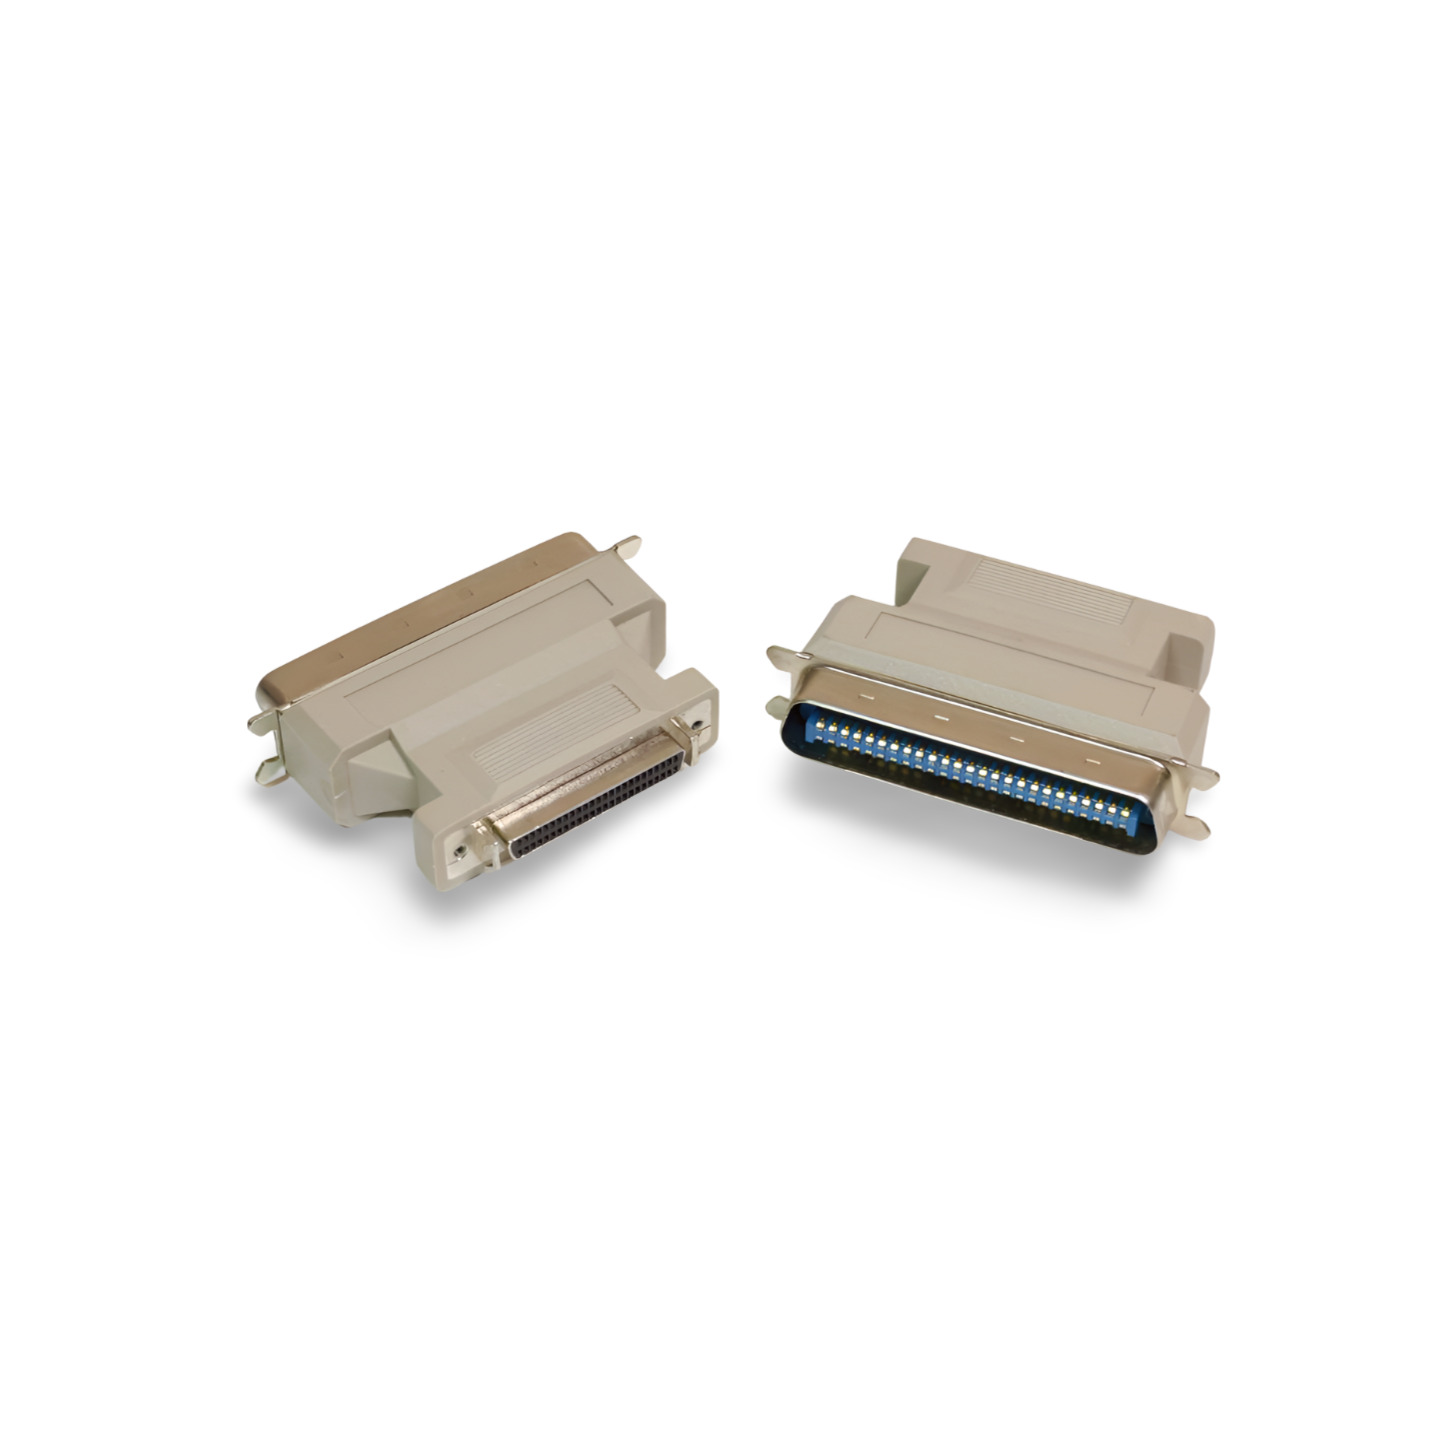 SCSI-I CN50 Male to SCSI-II HPDB50 Female Adapter - Beige